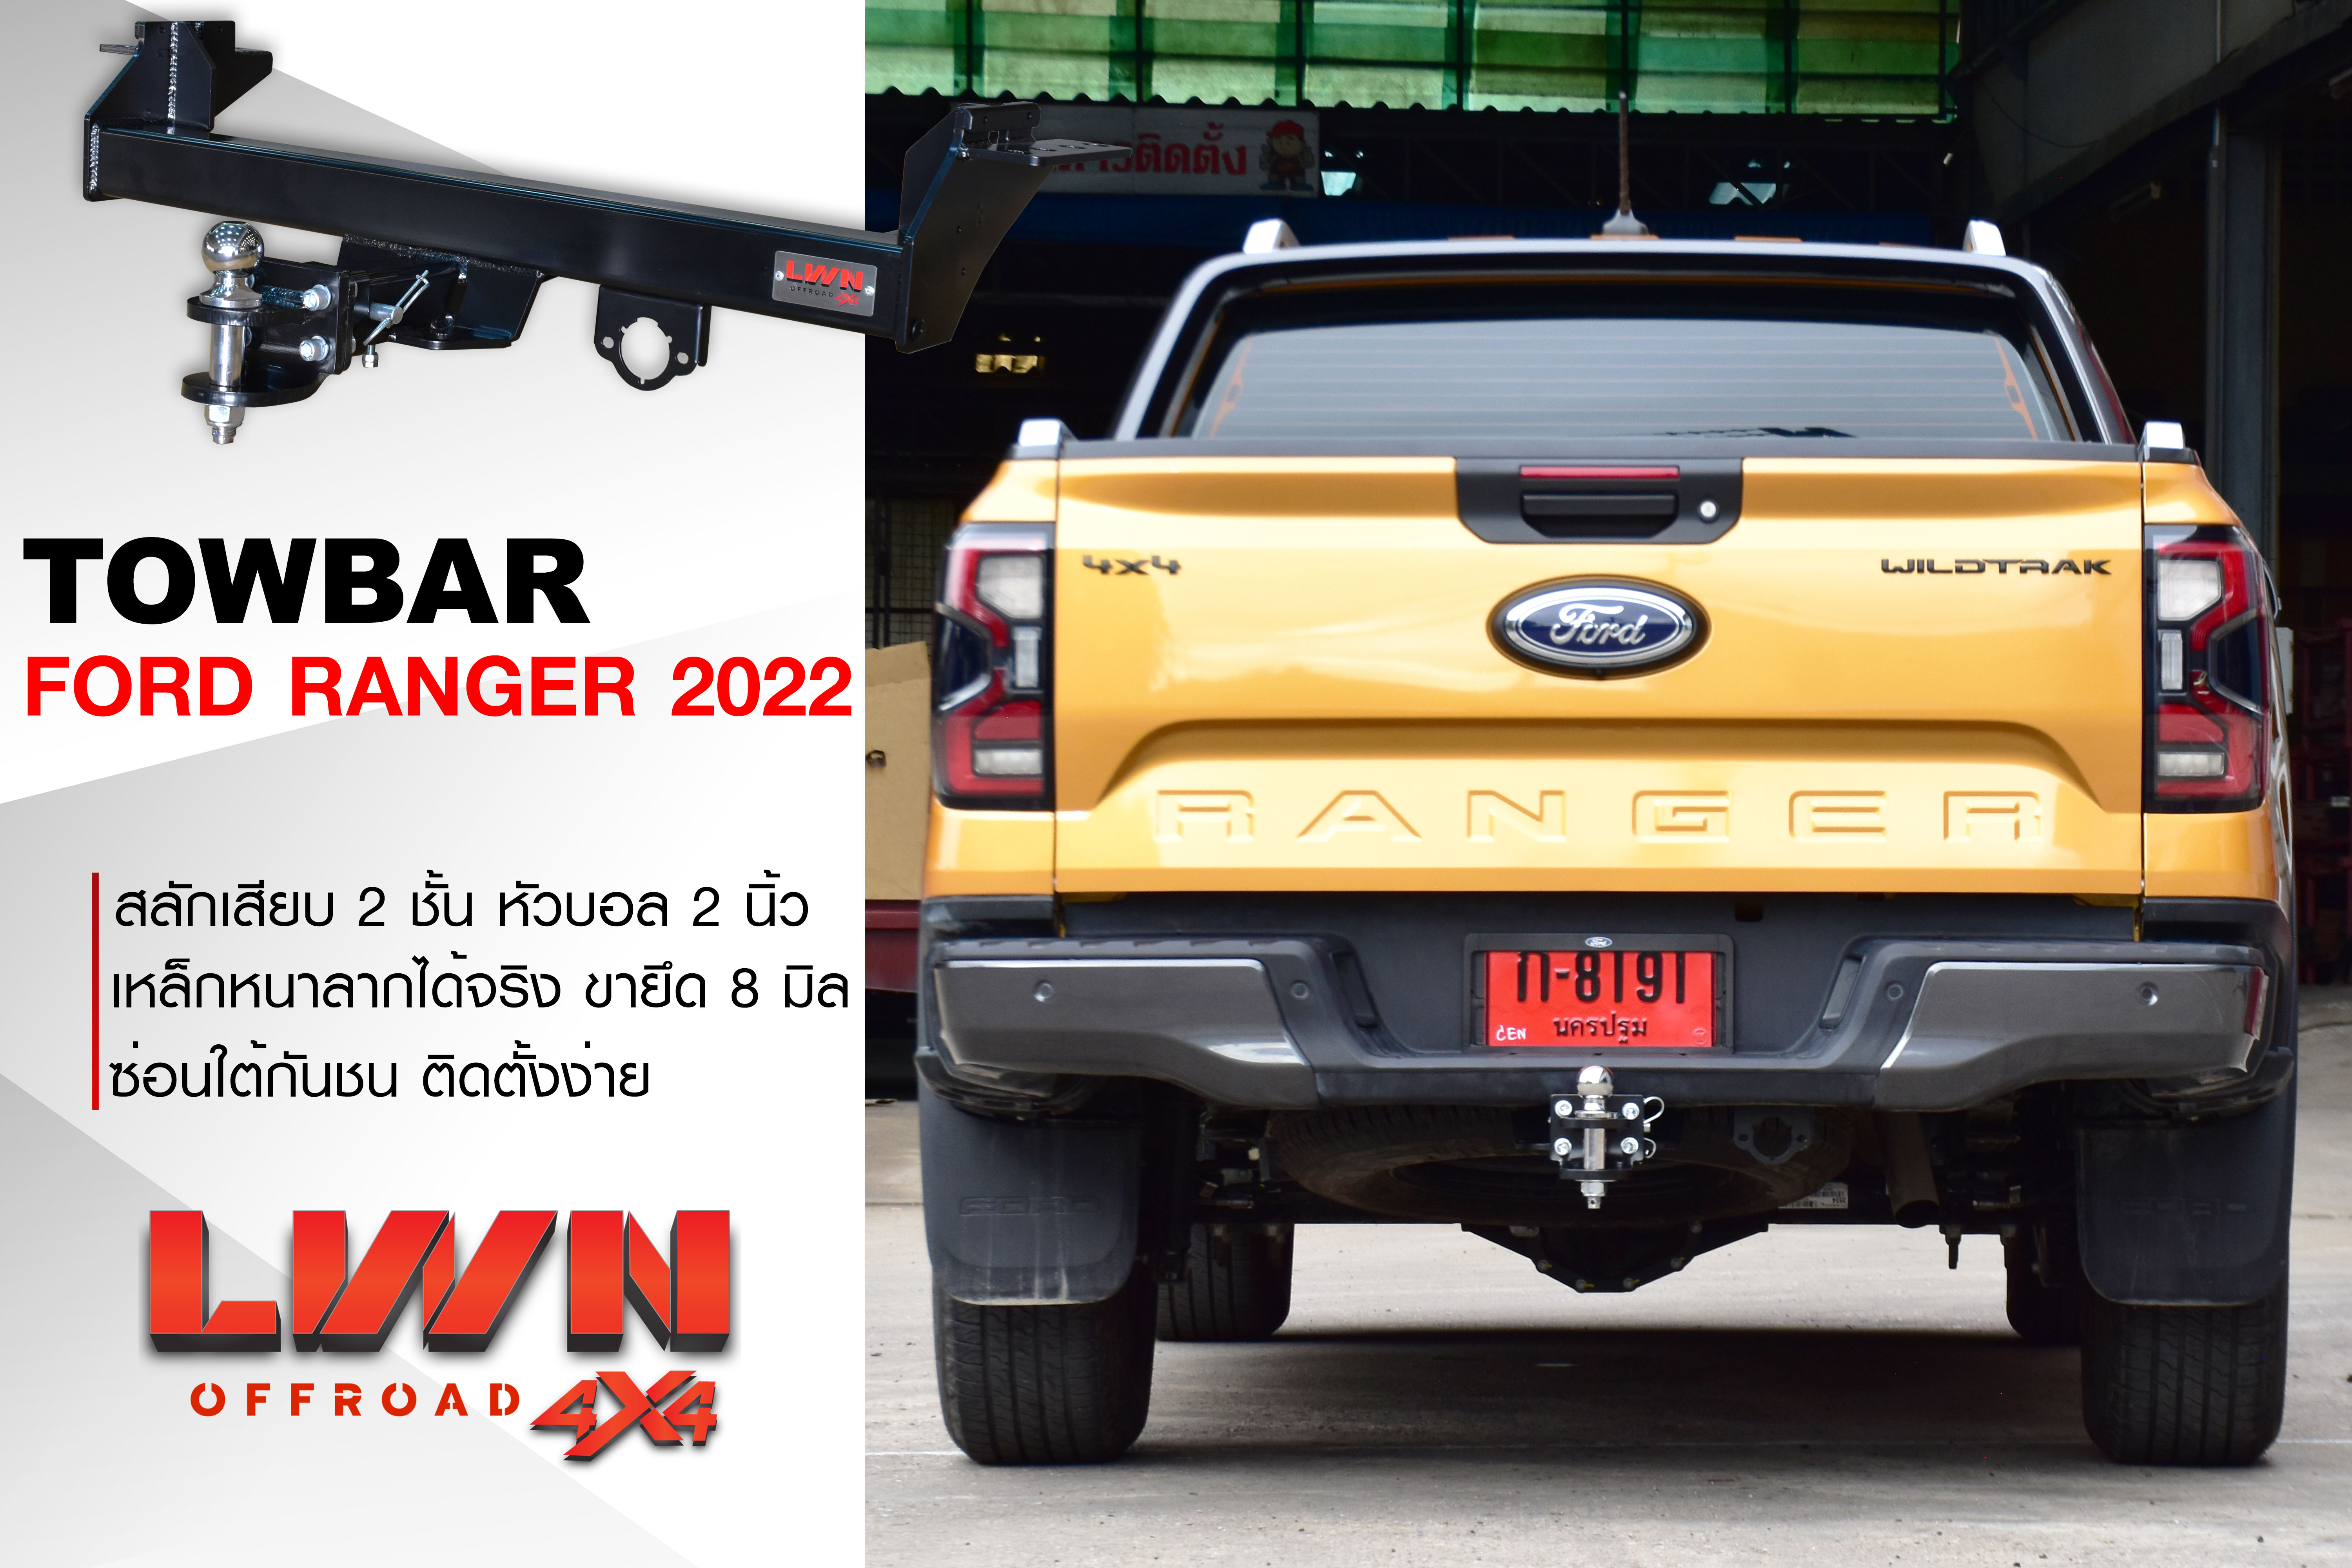 Towbar Ford Ranger 2022